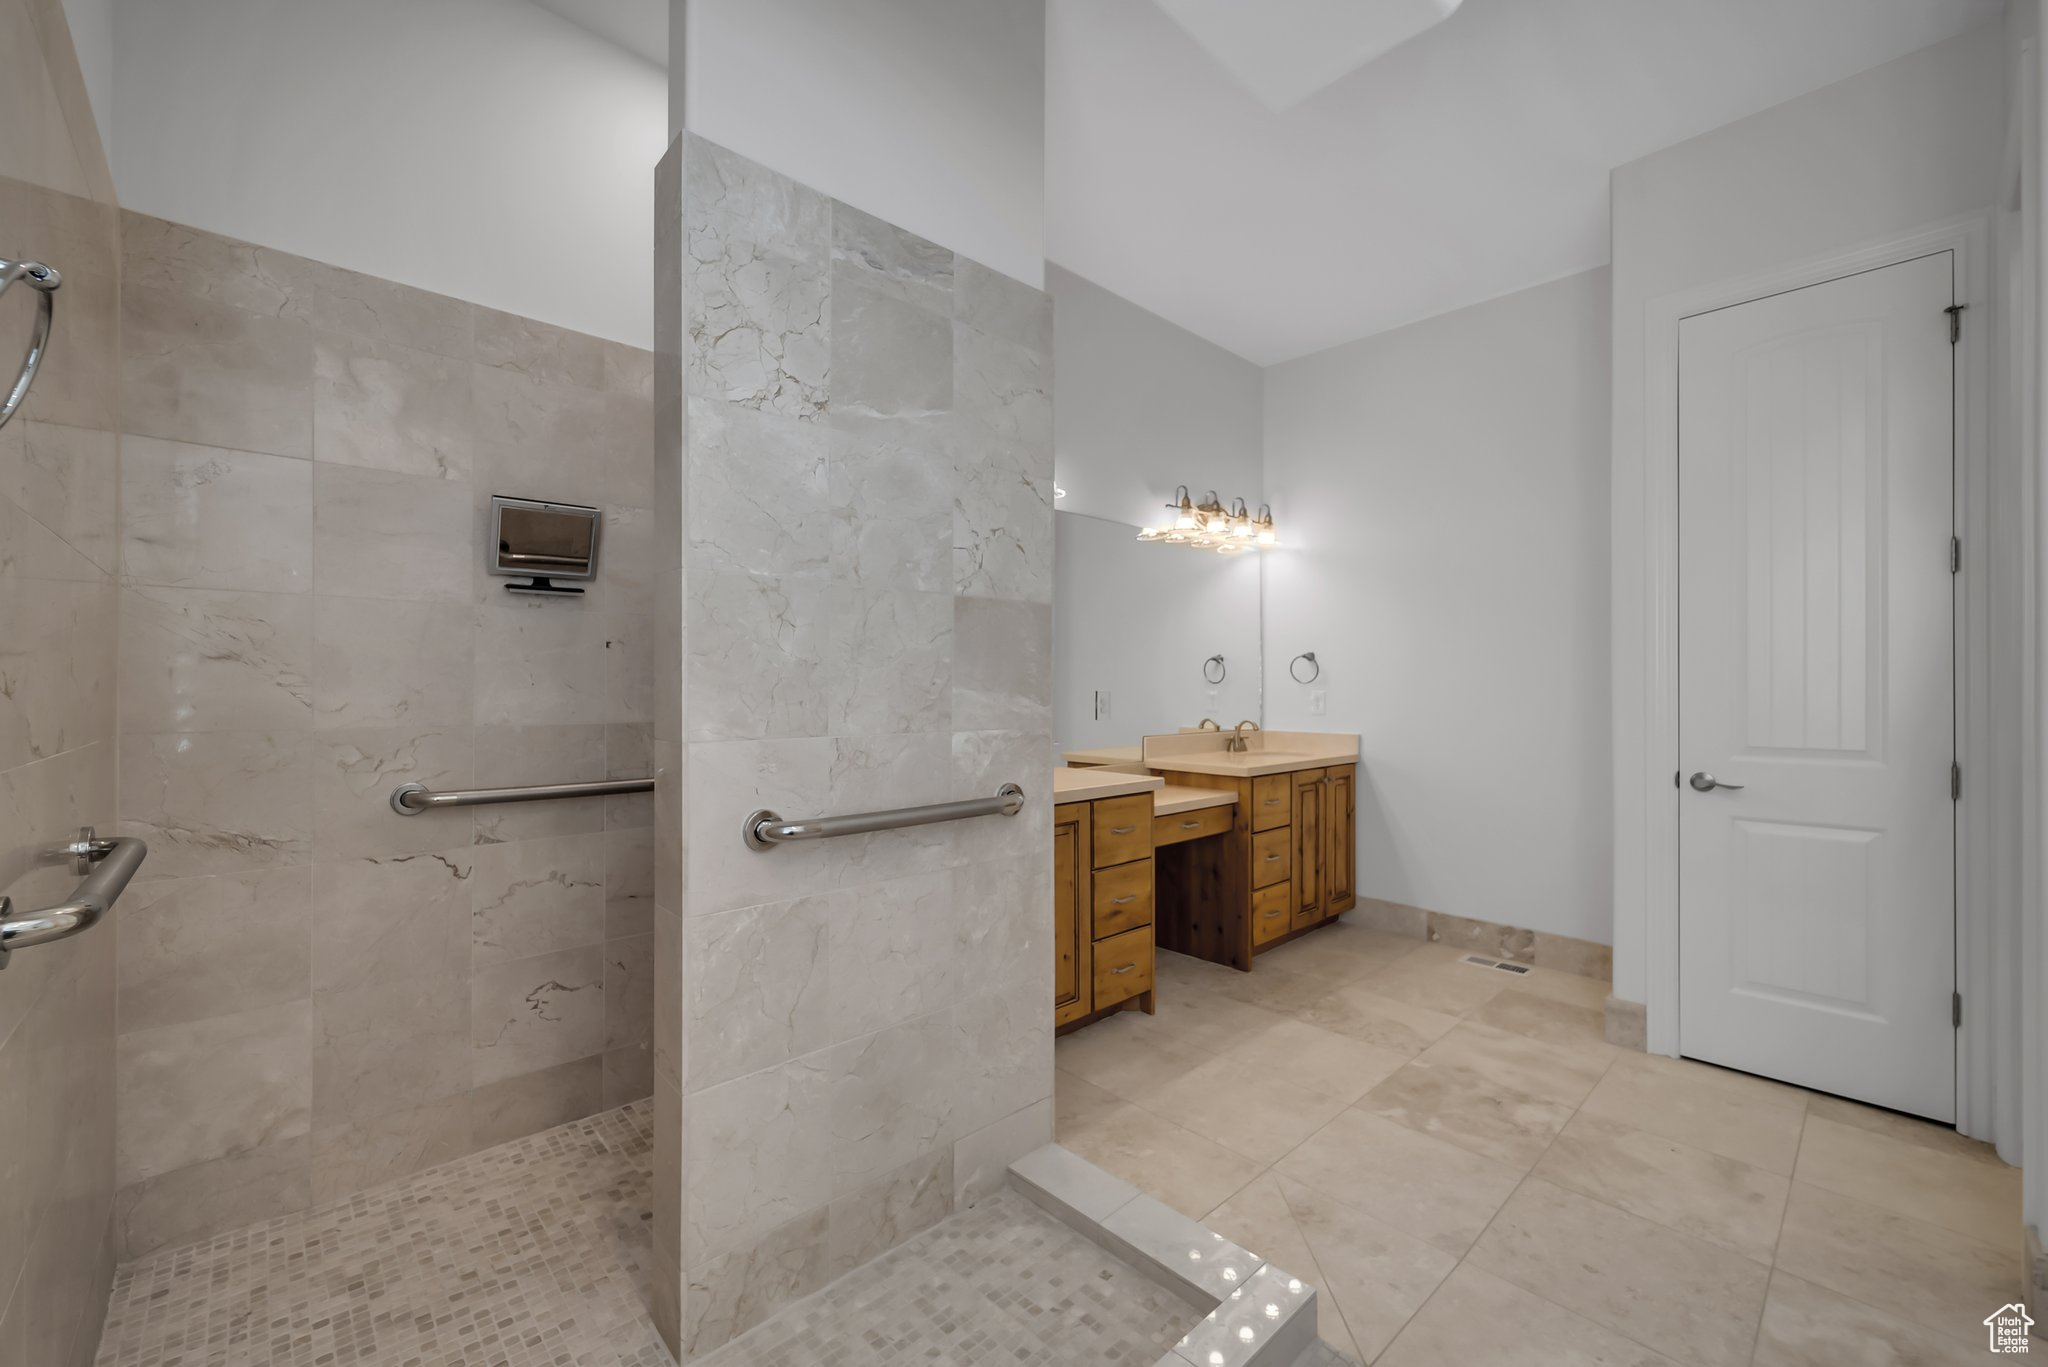 Bathroom featuring vanity, tile floors, and tiled shower